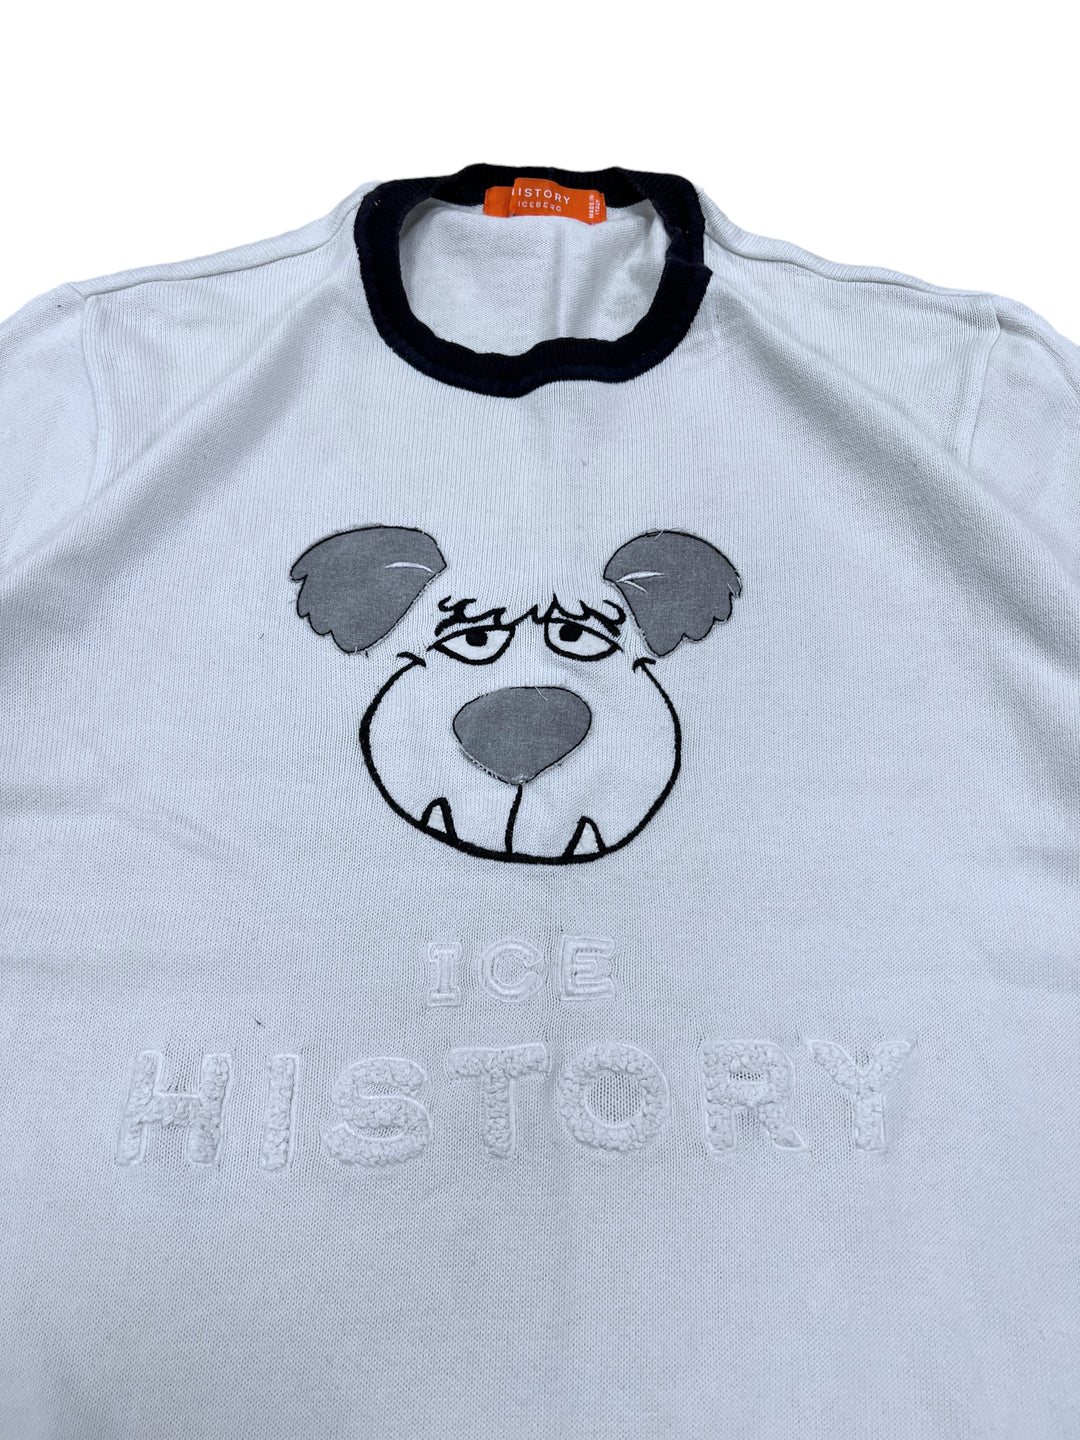 2000s History Iceberg Cotton T-Shirt Women’s Large